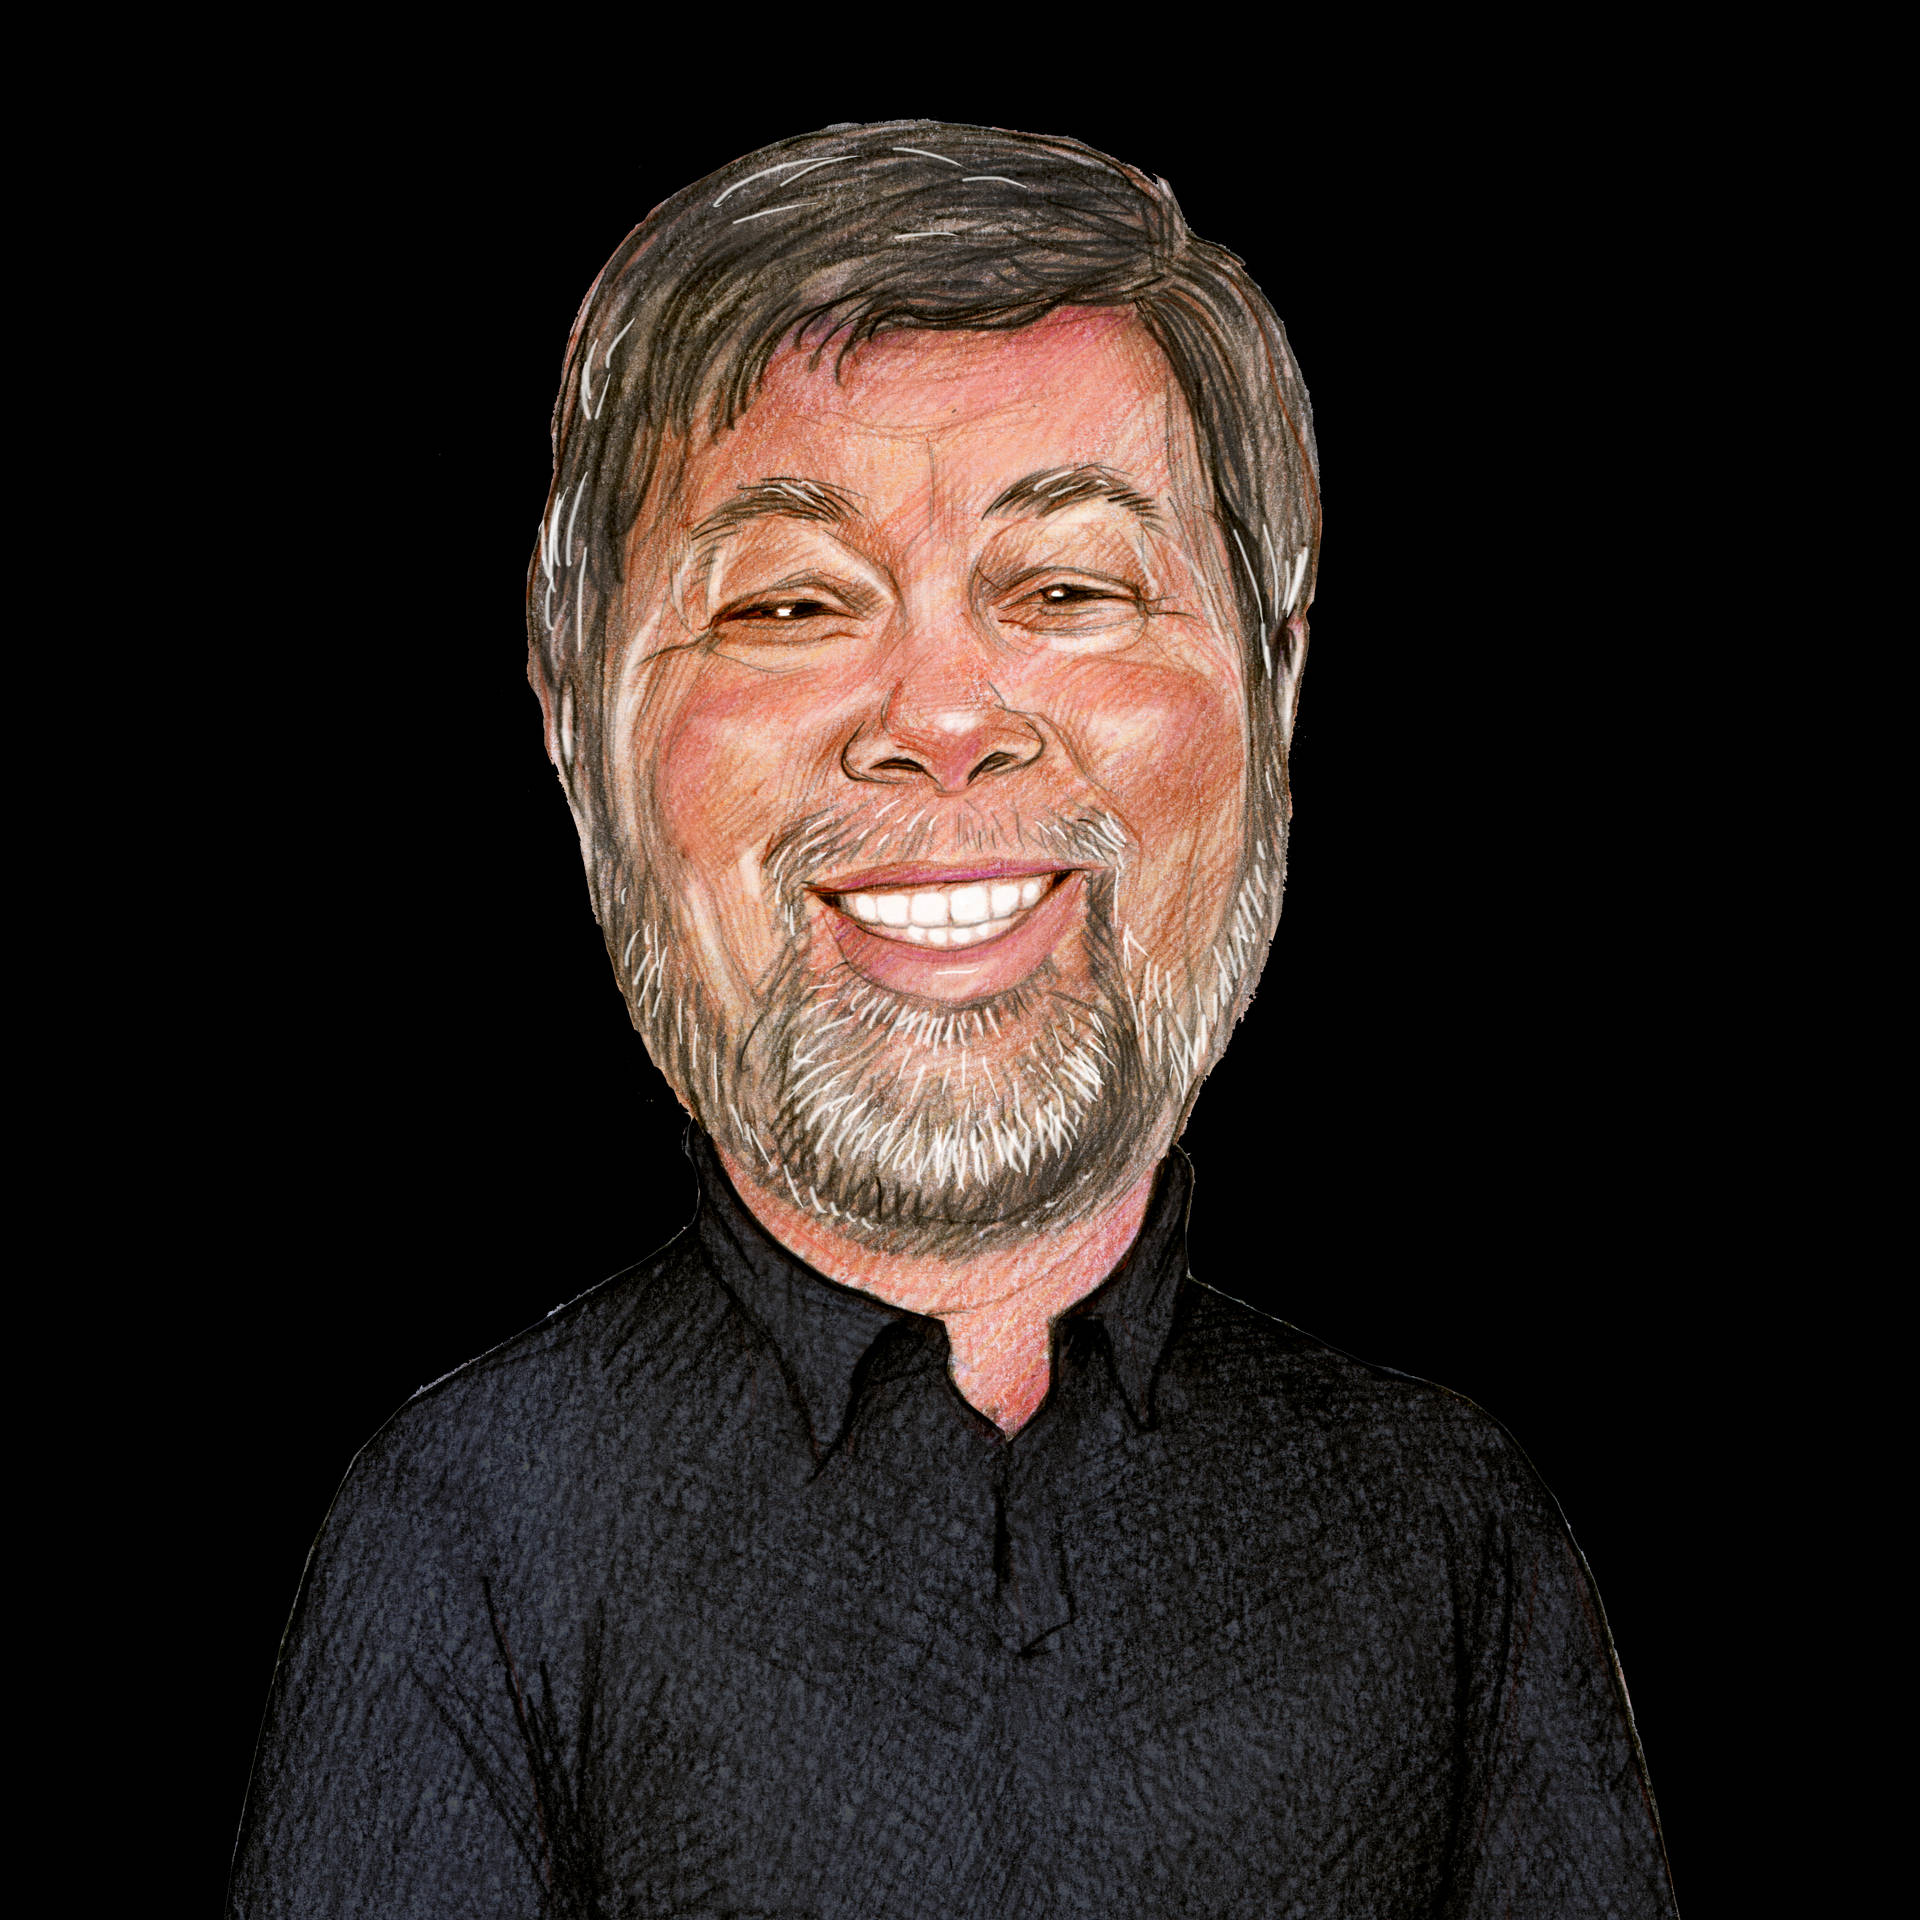 Steve Wozniak Colored Caricature Wallpaper